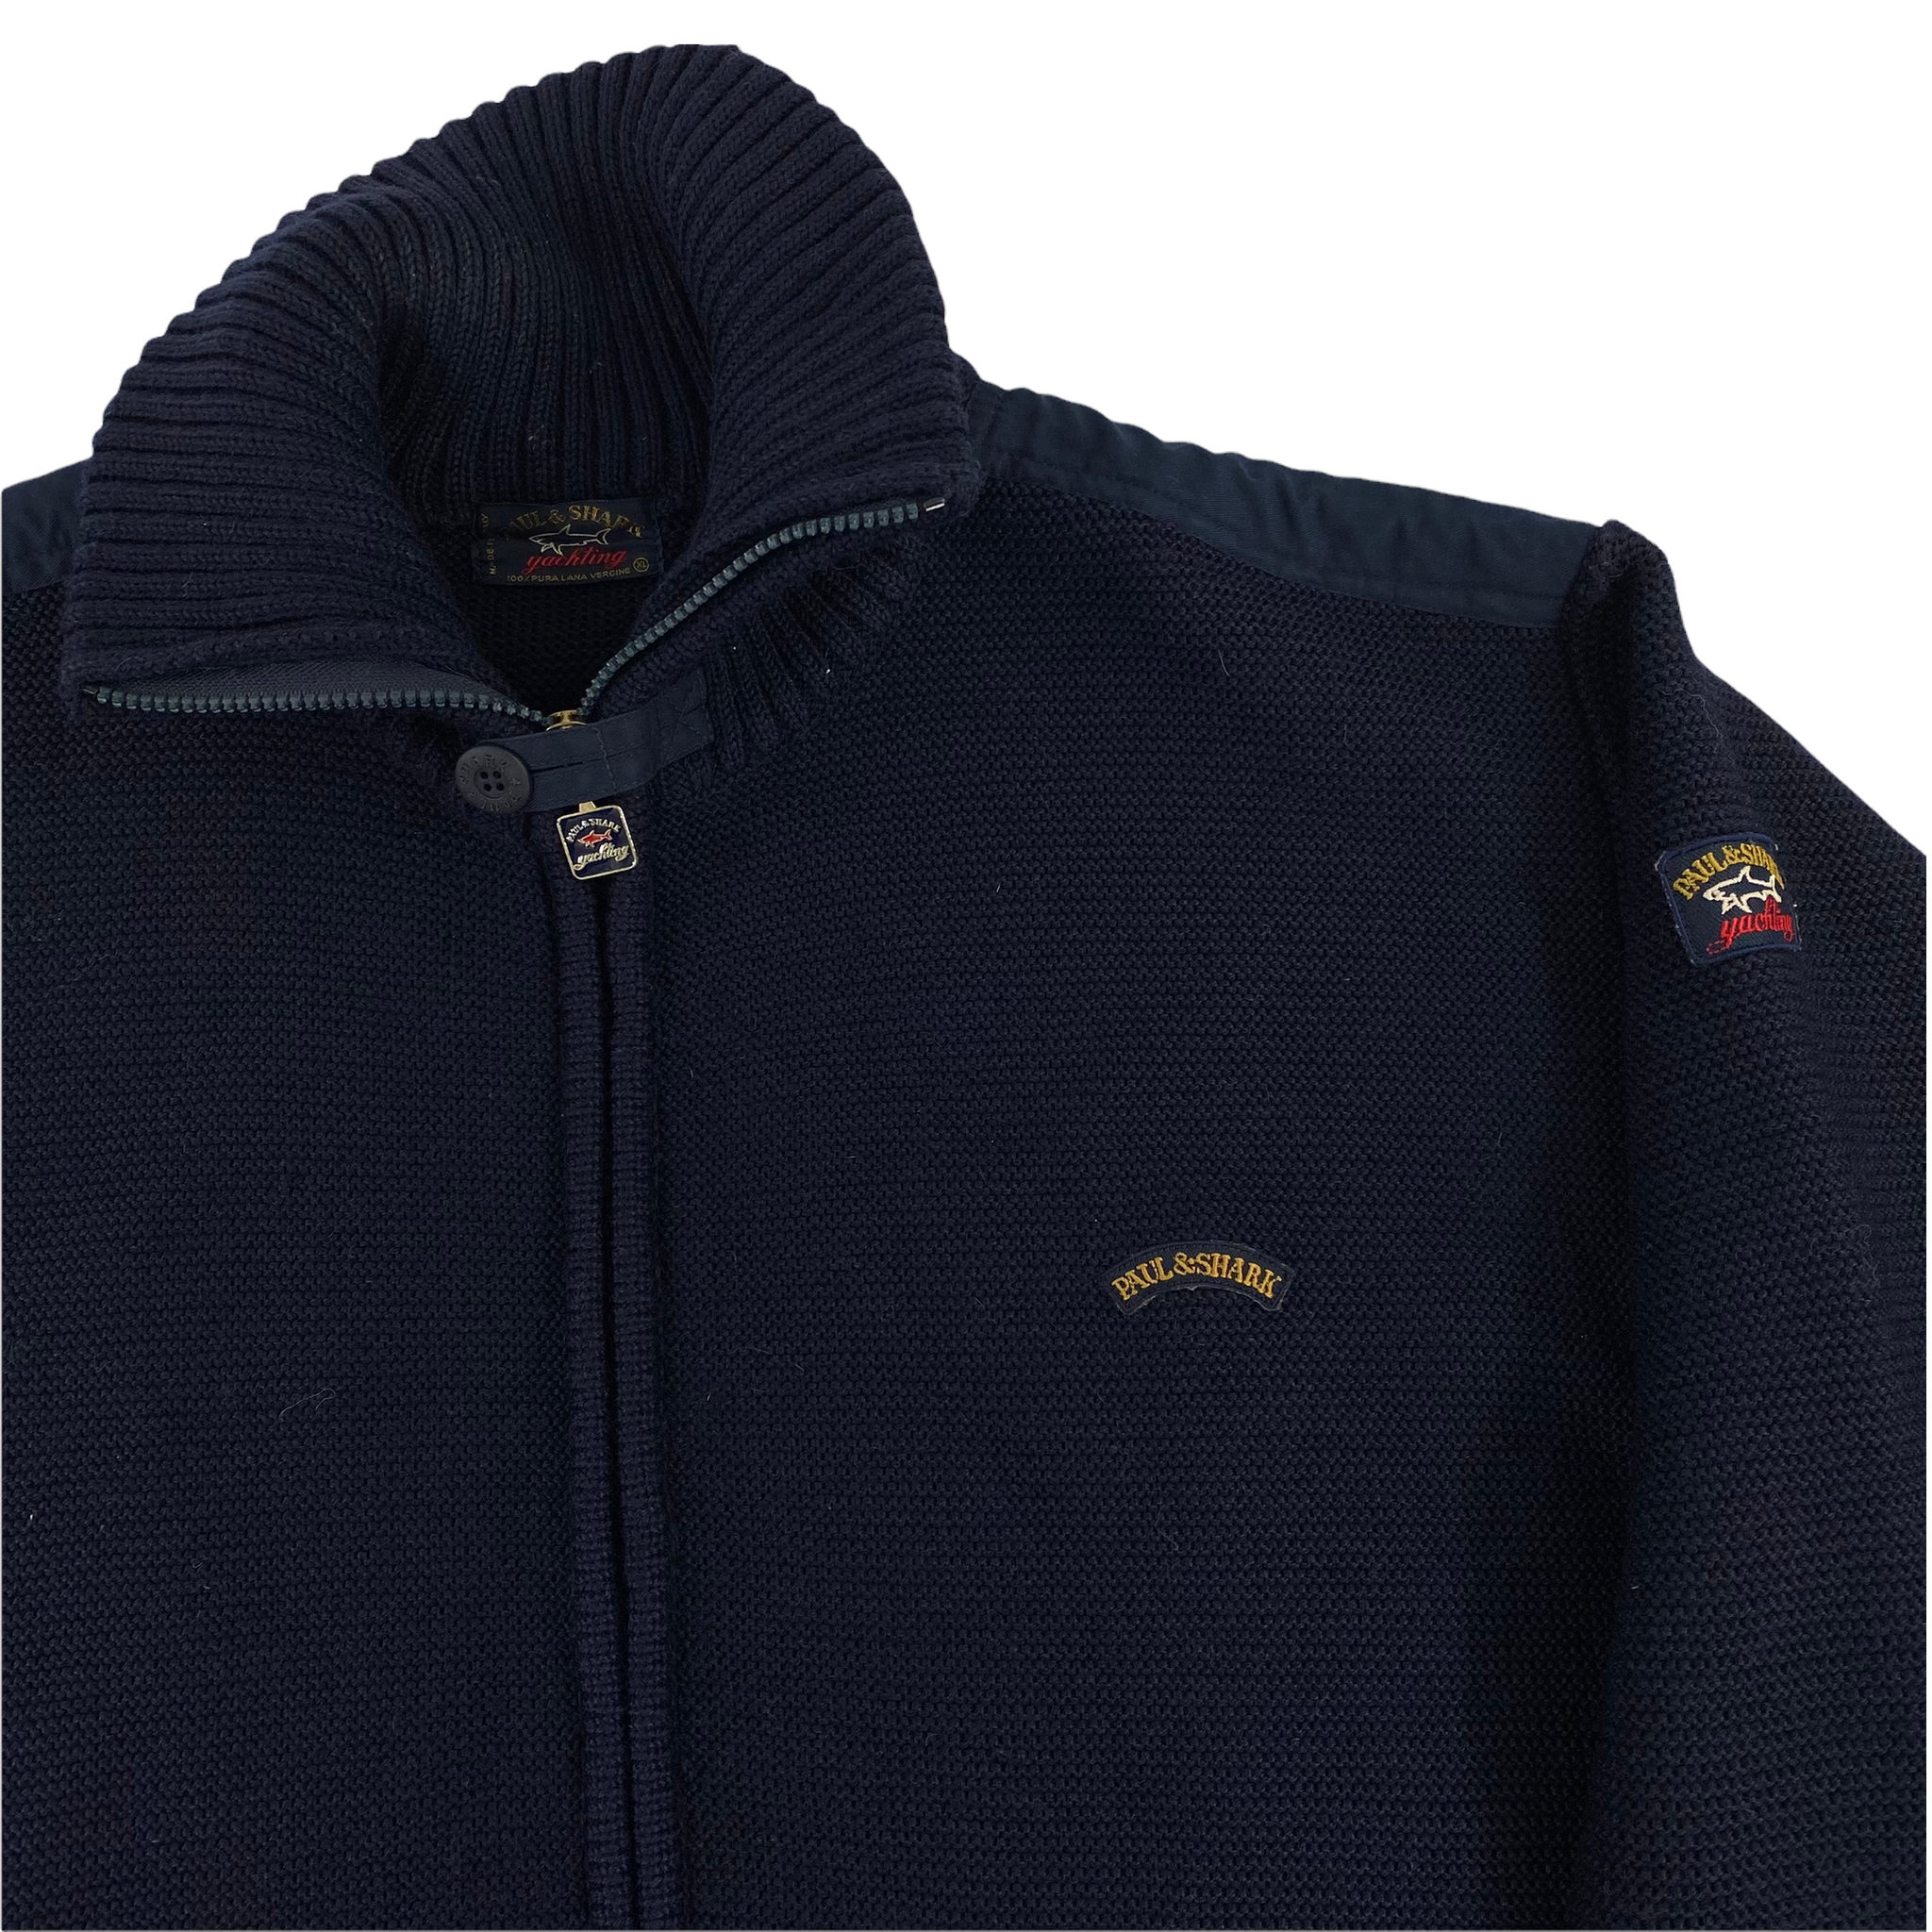 cel schrobben draadloos Paul and shark heavyweight wool sailing jacket Made in italy🇮🇹 XL –  Vintage Sponsor